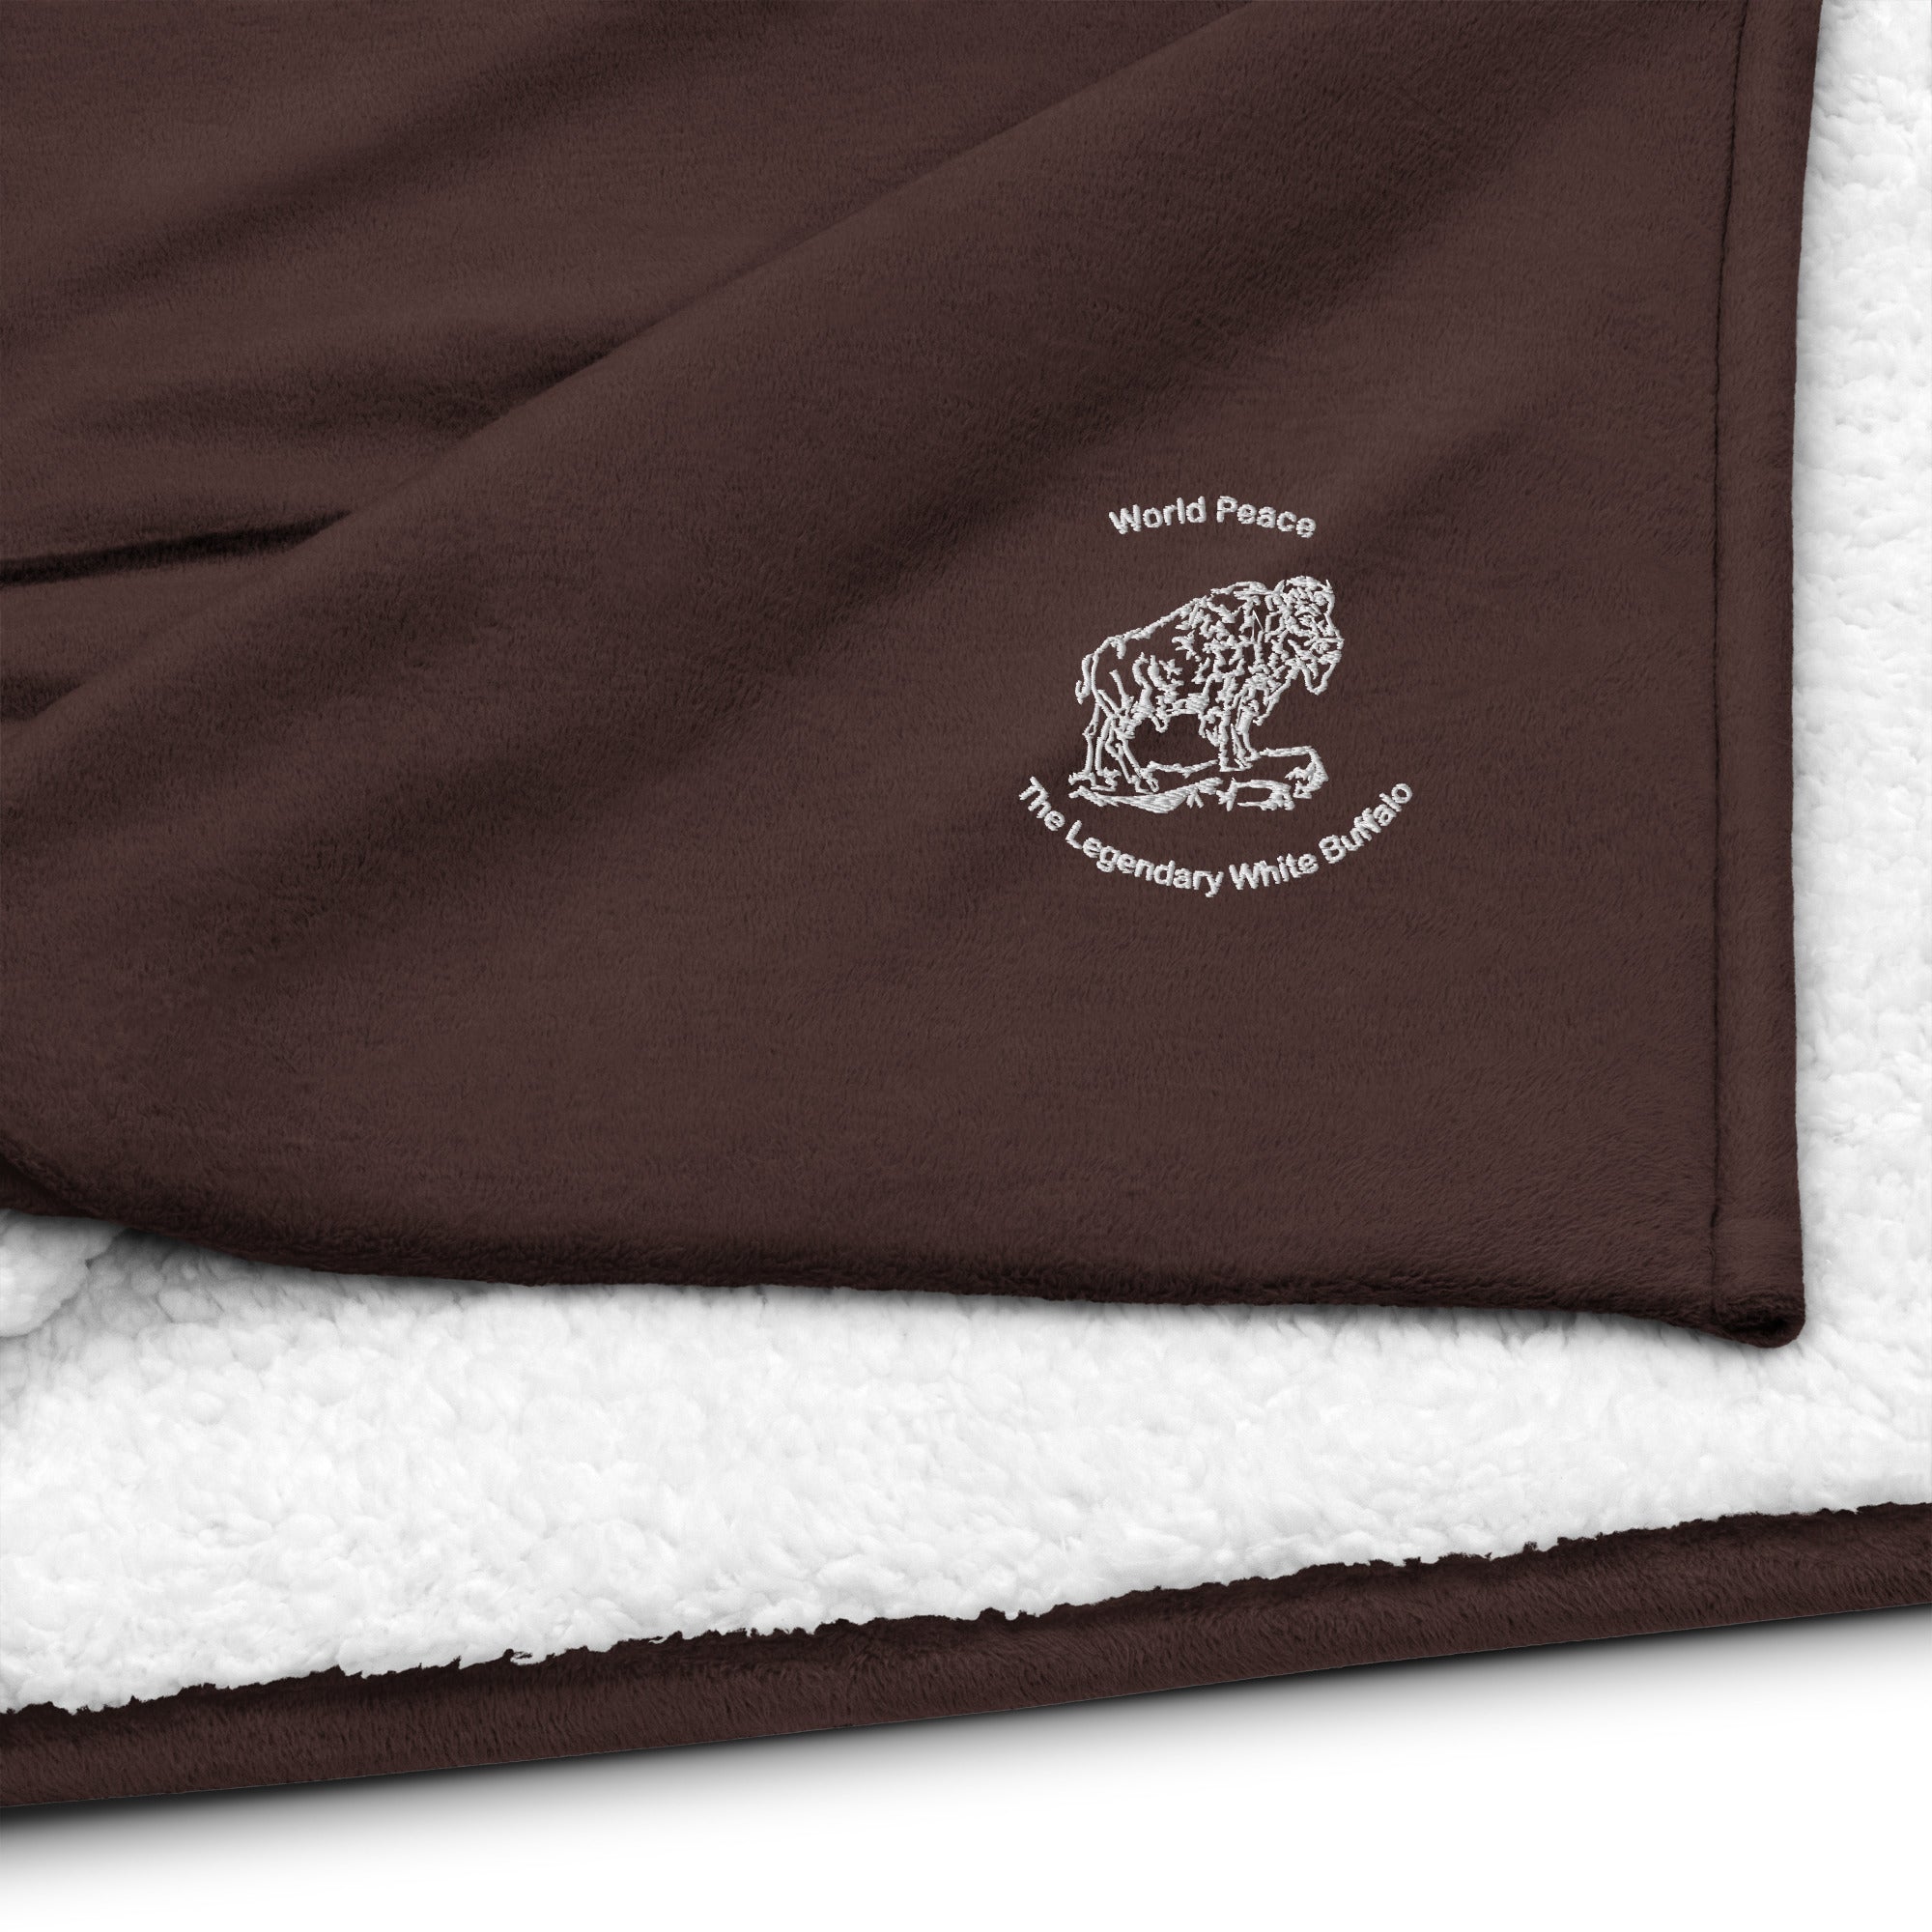 Shoosty White Buffalo Premium Sherpa Blanket